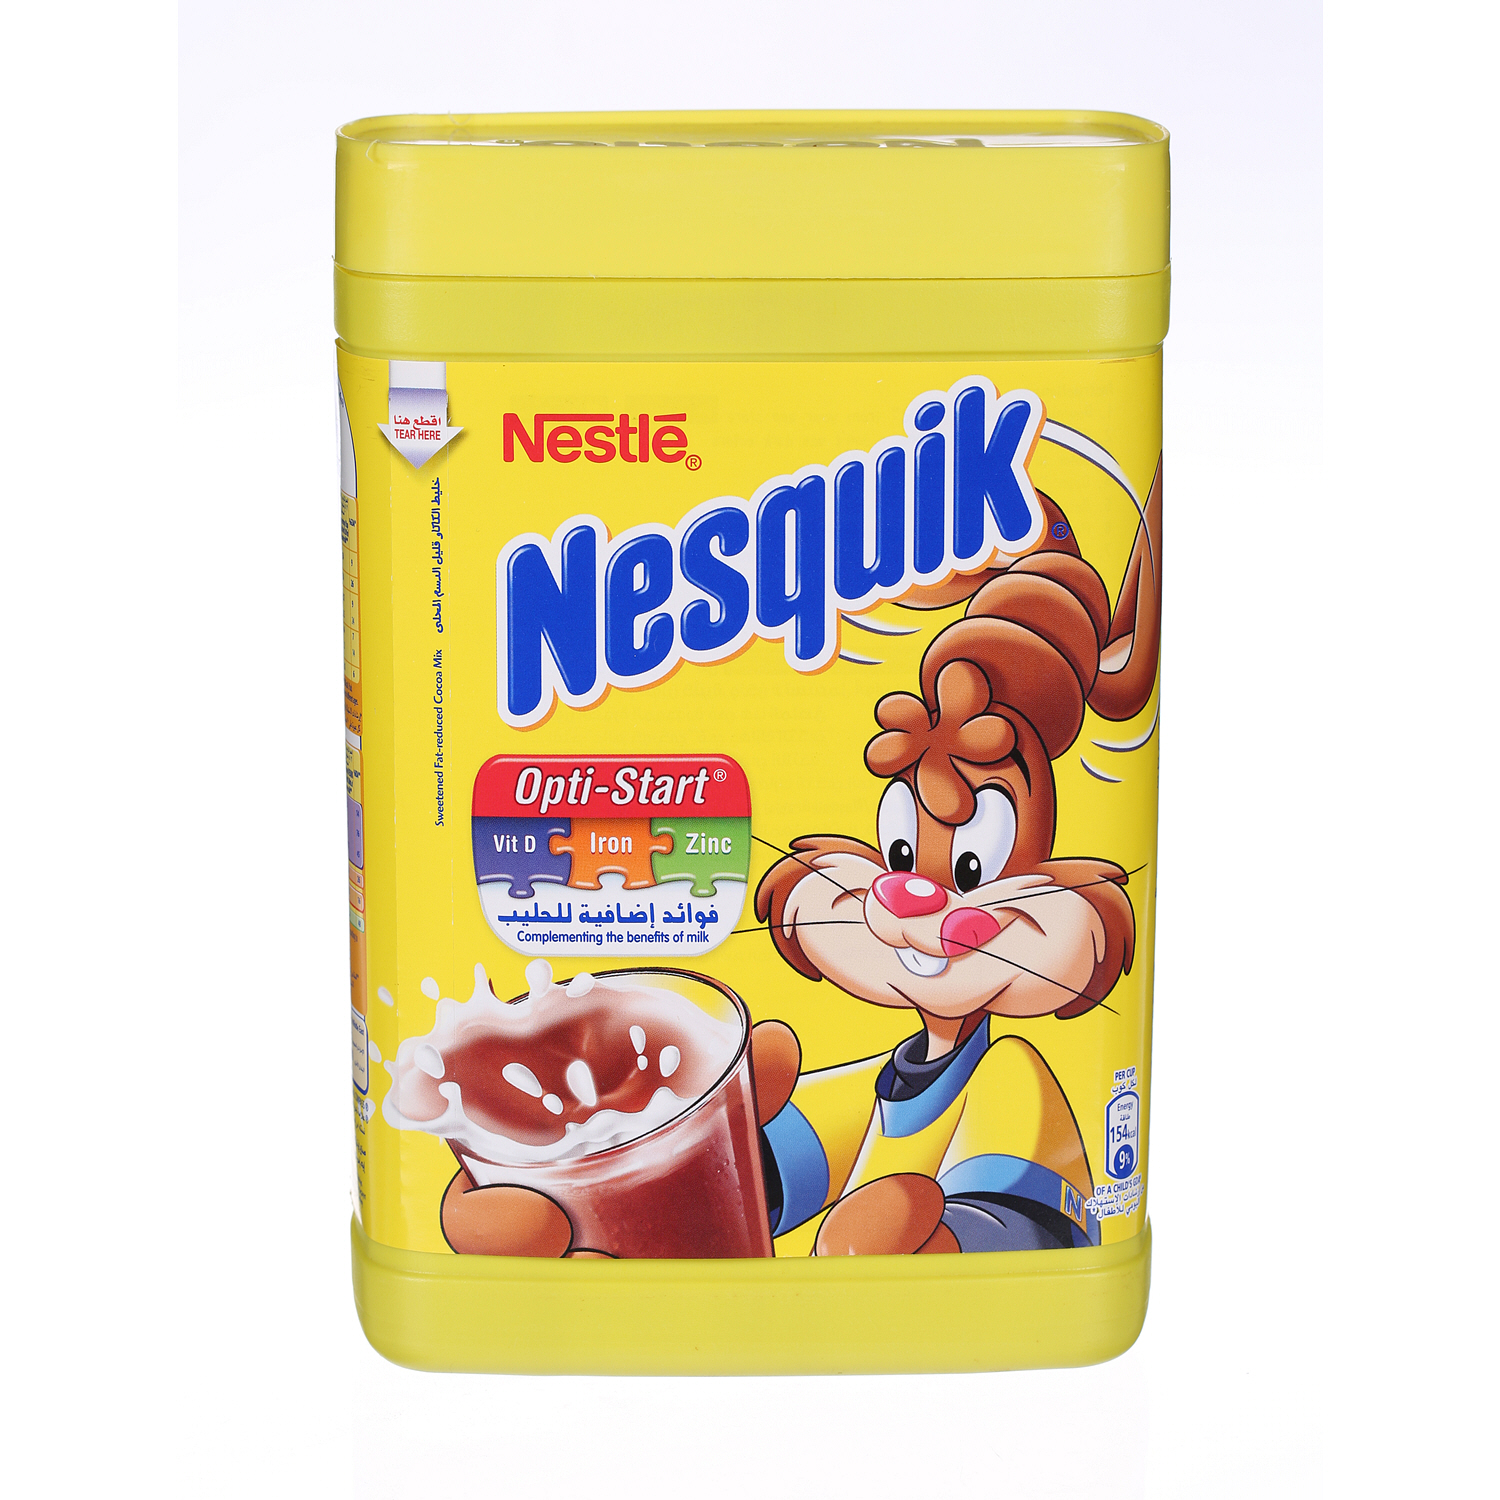 Nestlé Nesquik Choco Drink 1 Kg